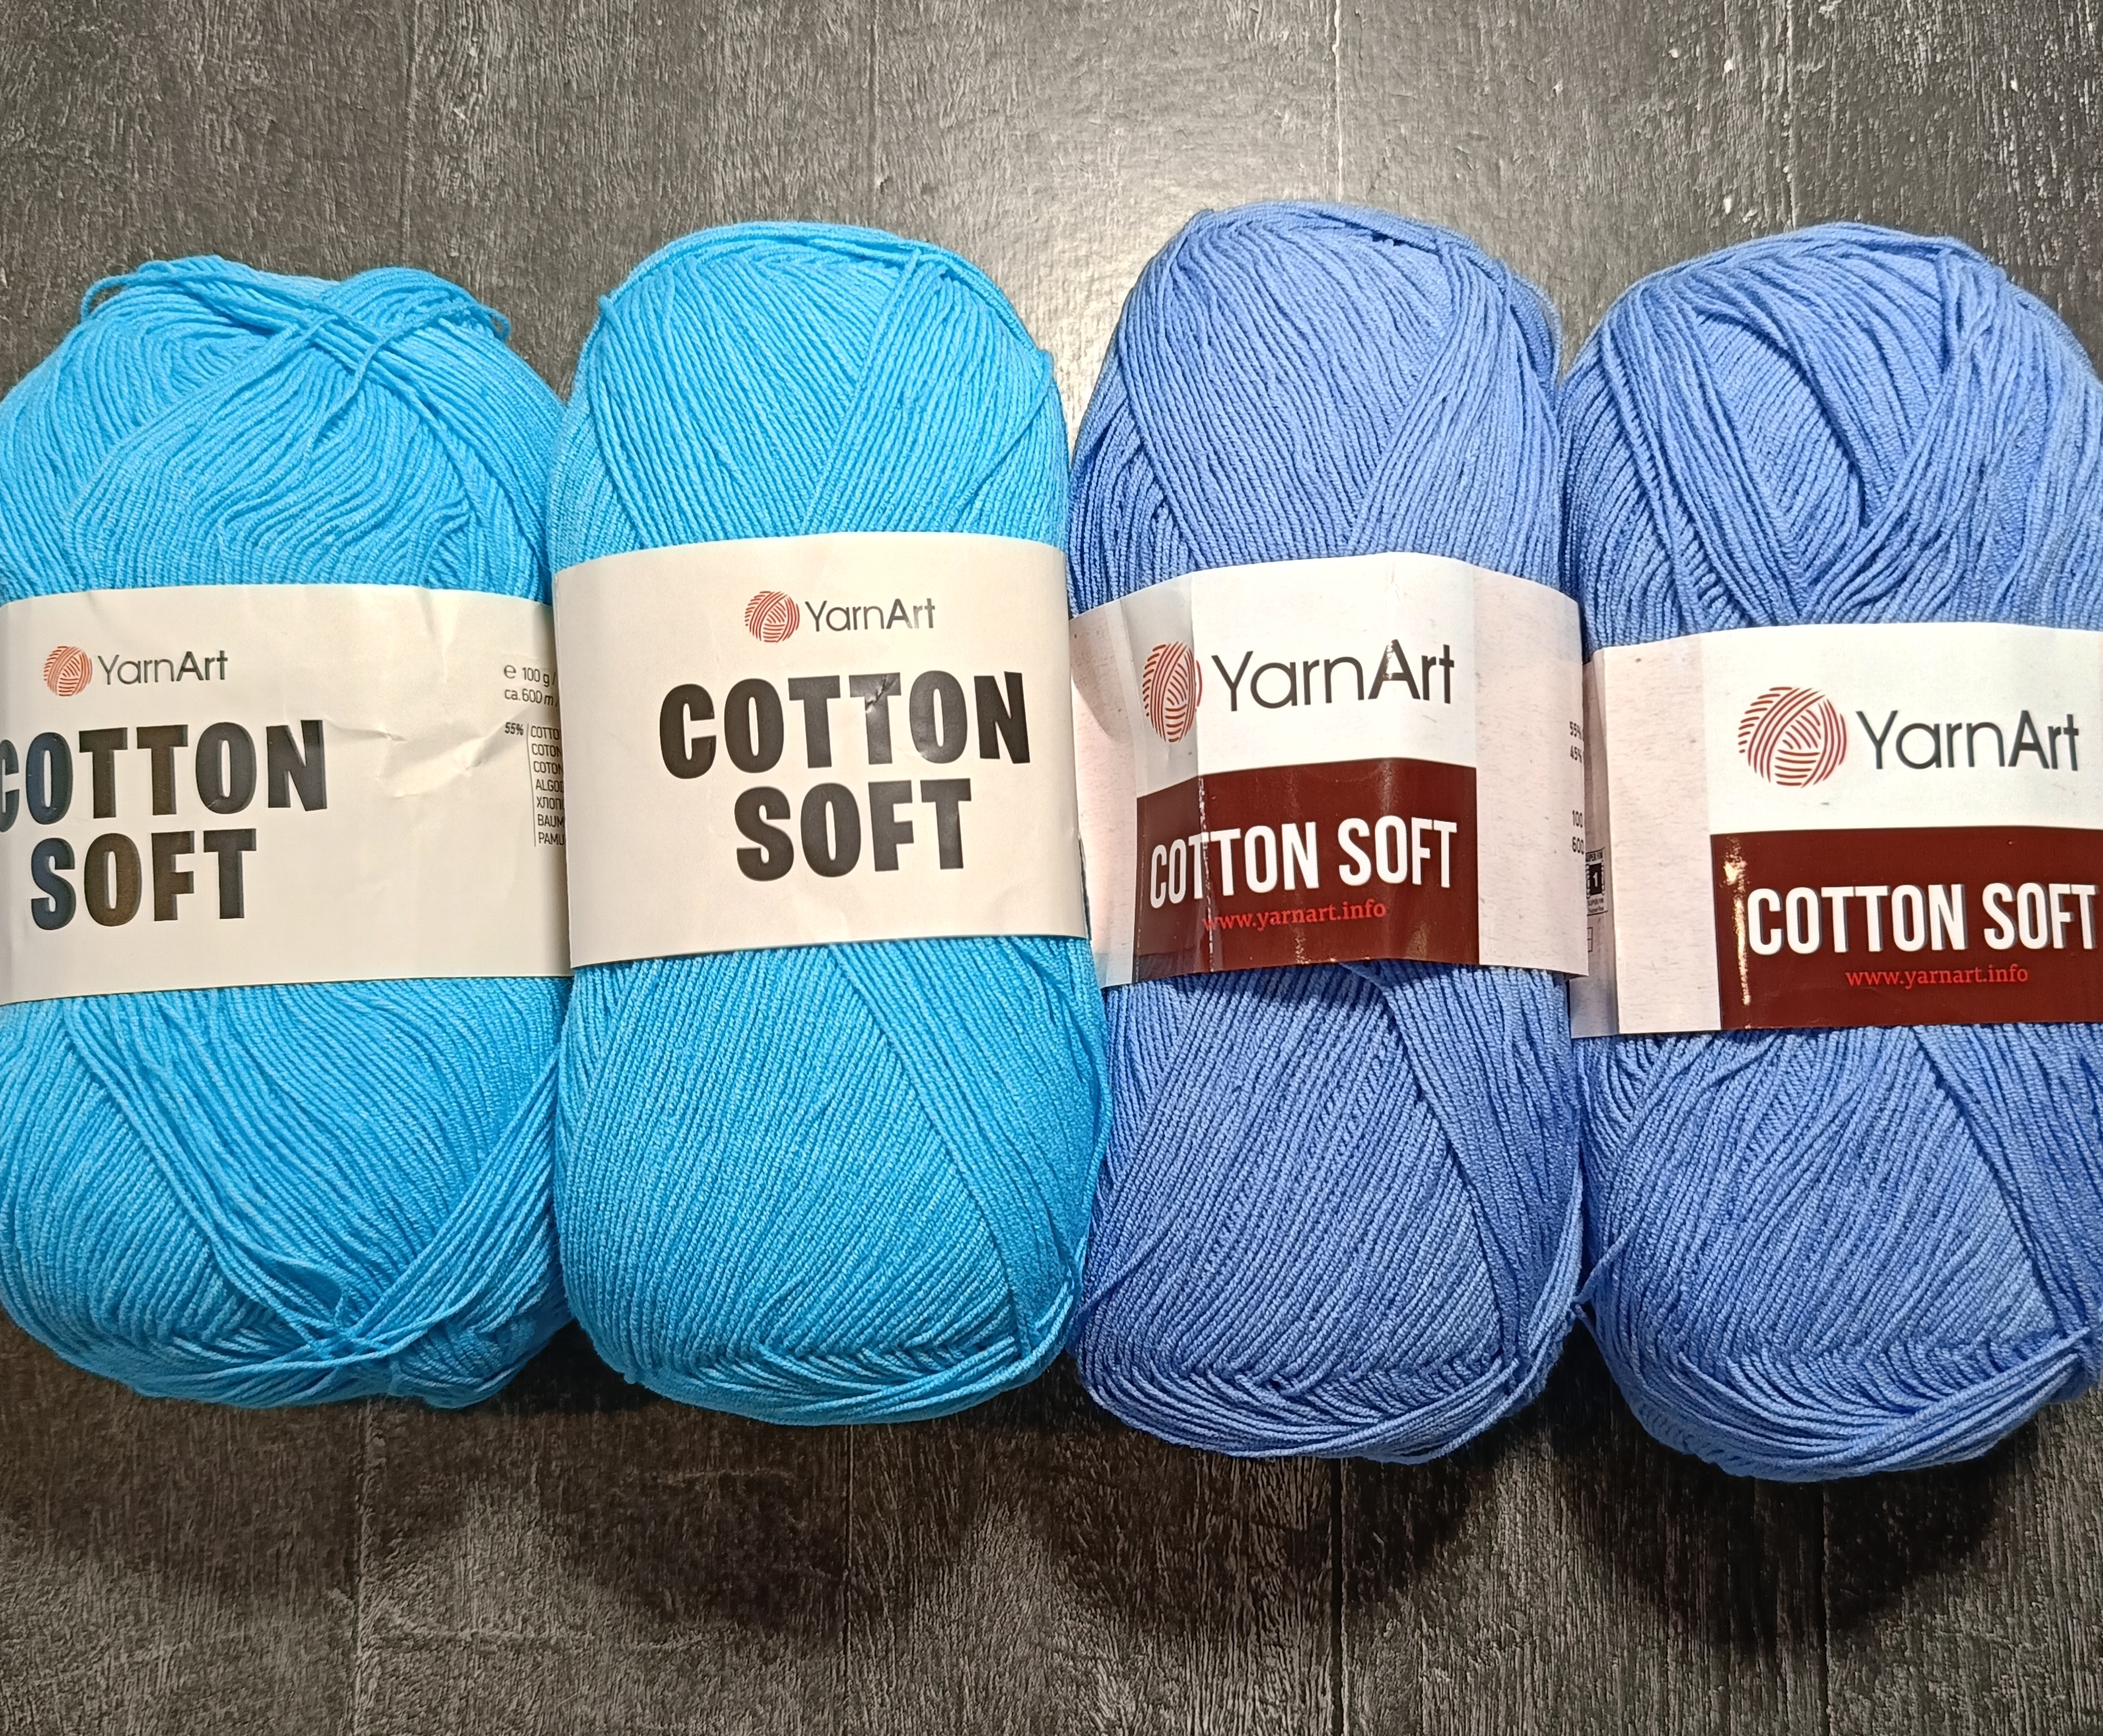 Yarnart Cotton Soft